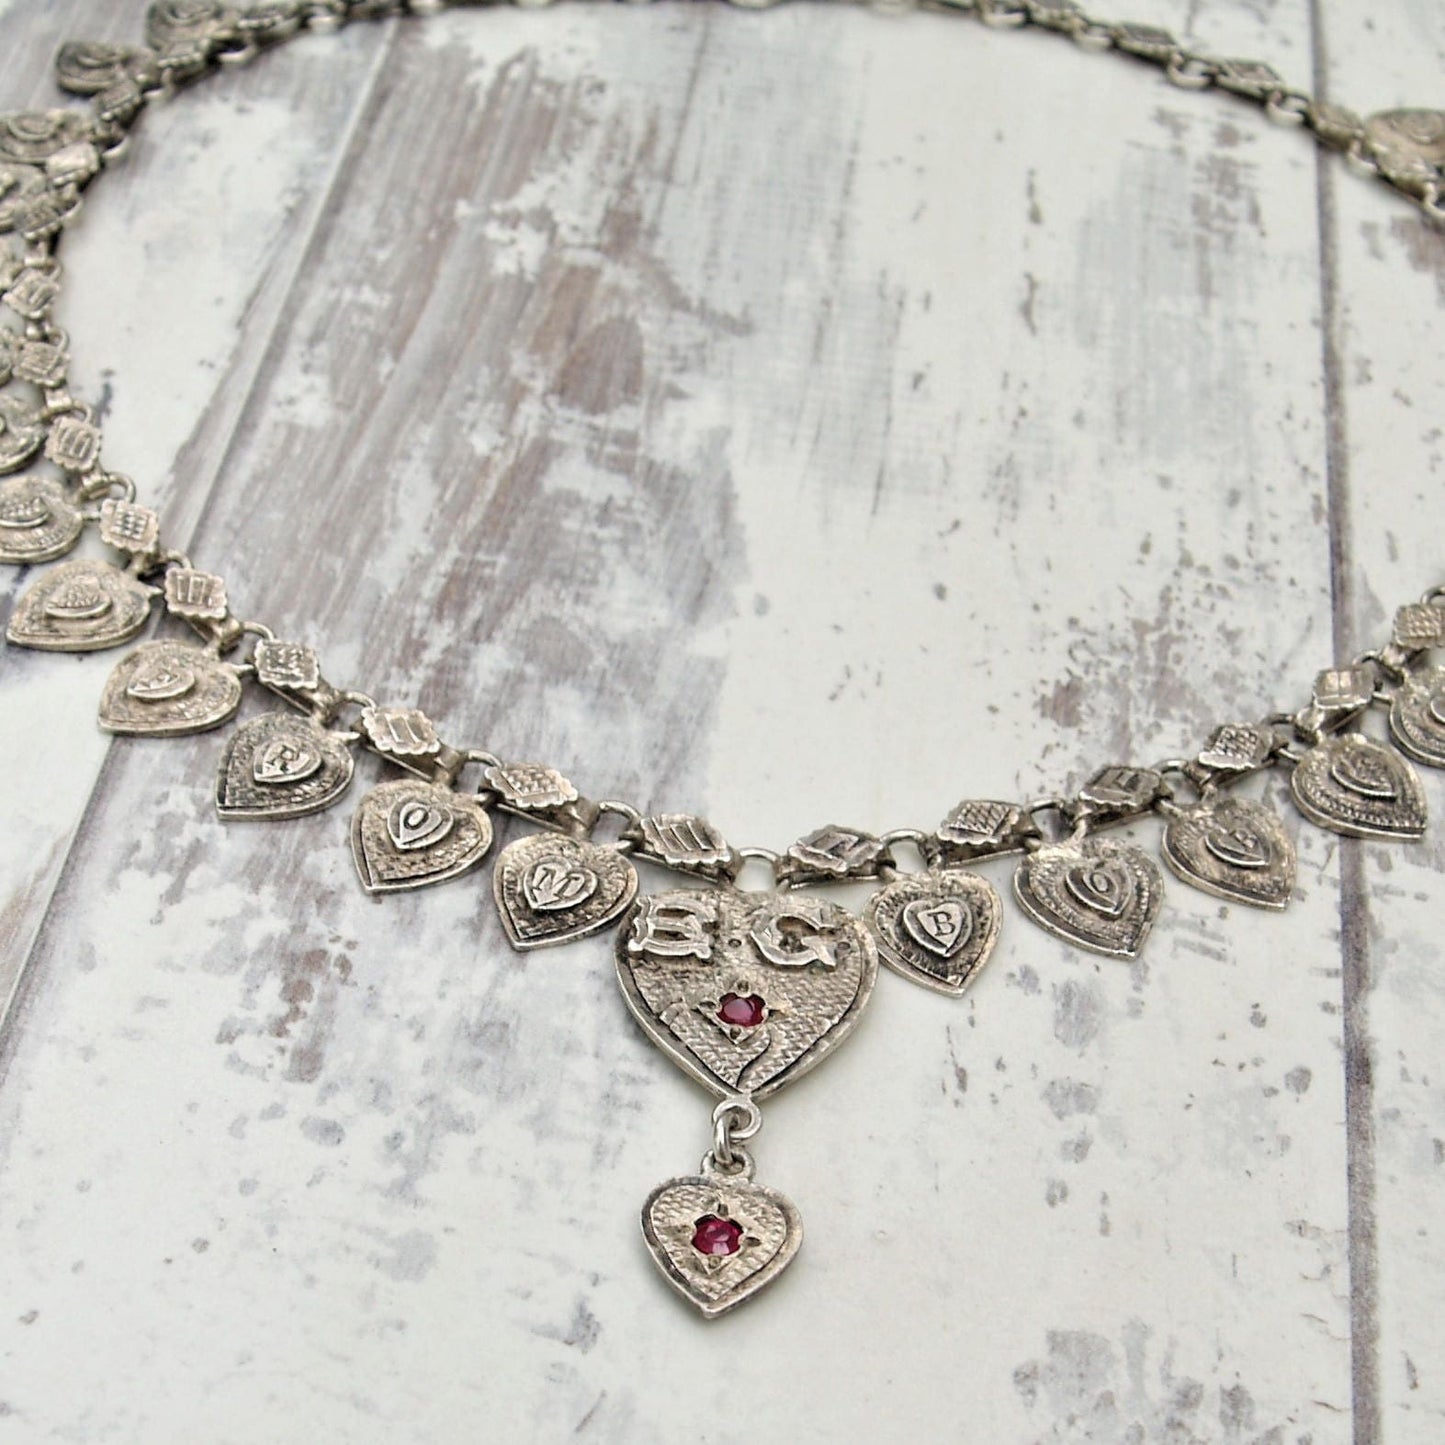 Vintage unique handmade silver heart choker necklace - 17.5 inch length